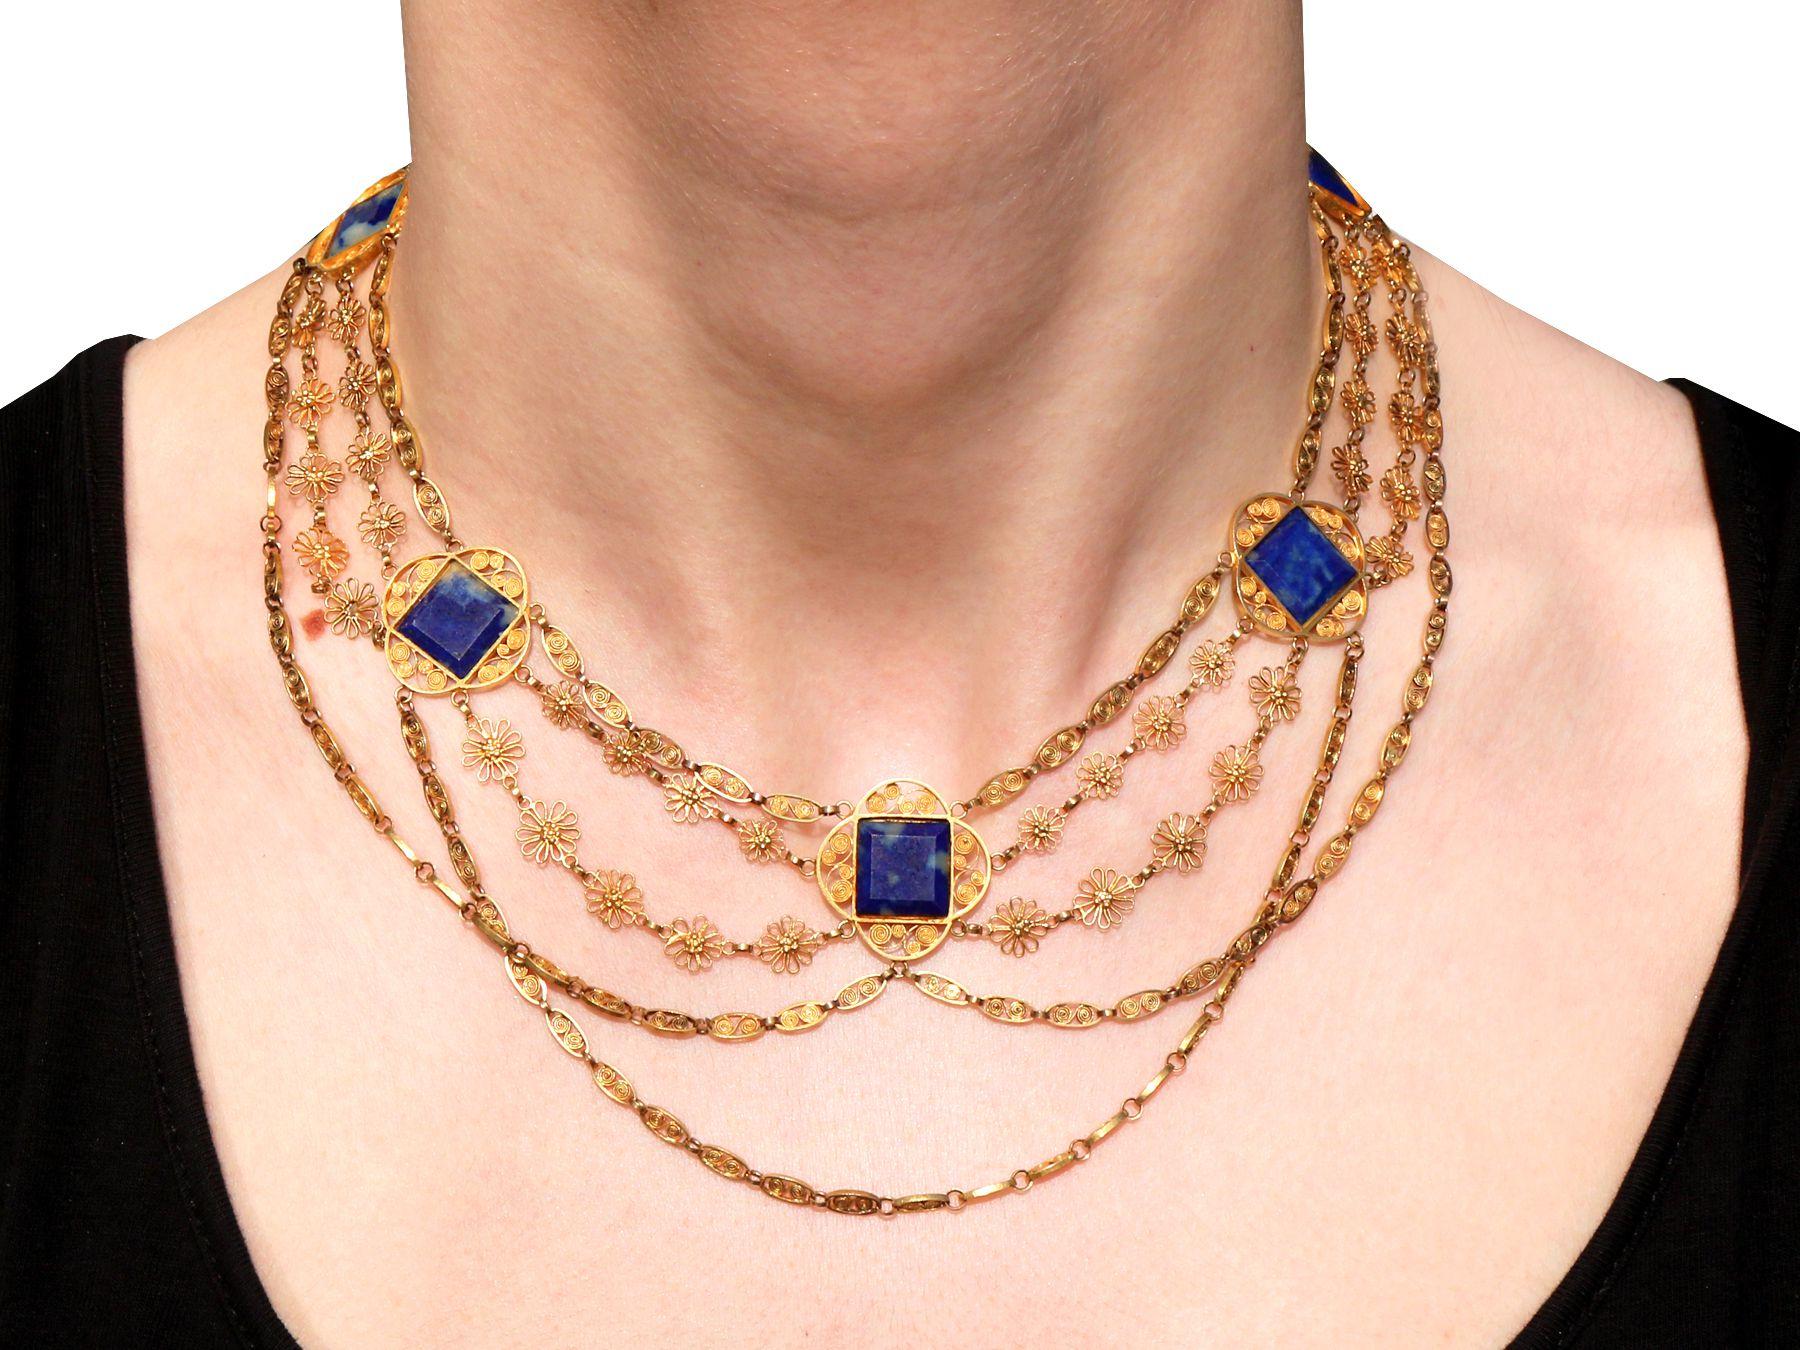 Antique Victorian 5.55 Carat Lapis Lazuli Yellow Gold Necklace For Sale 2